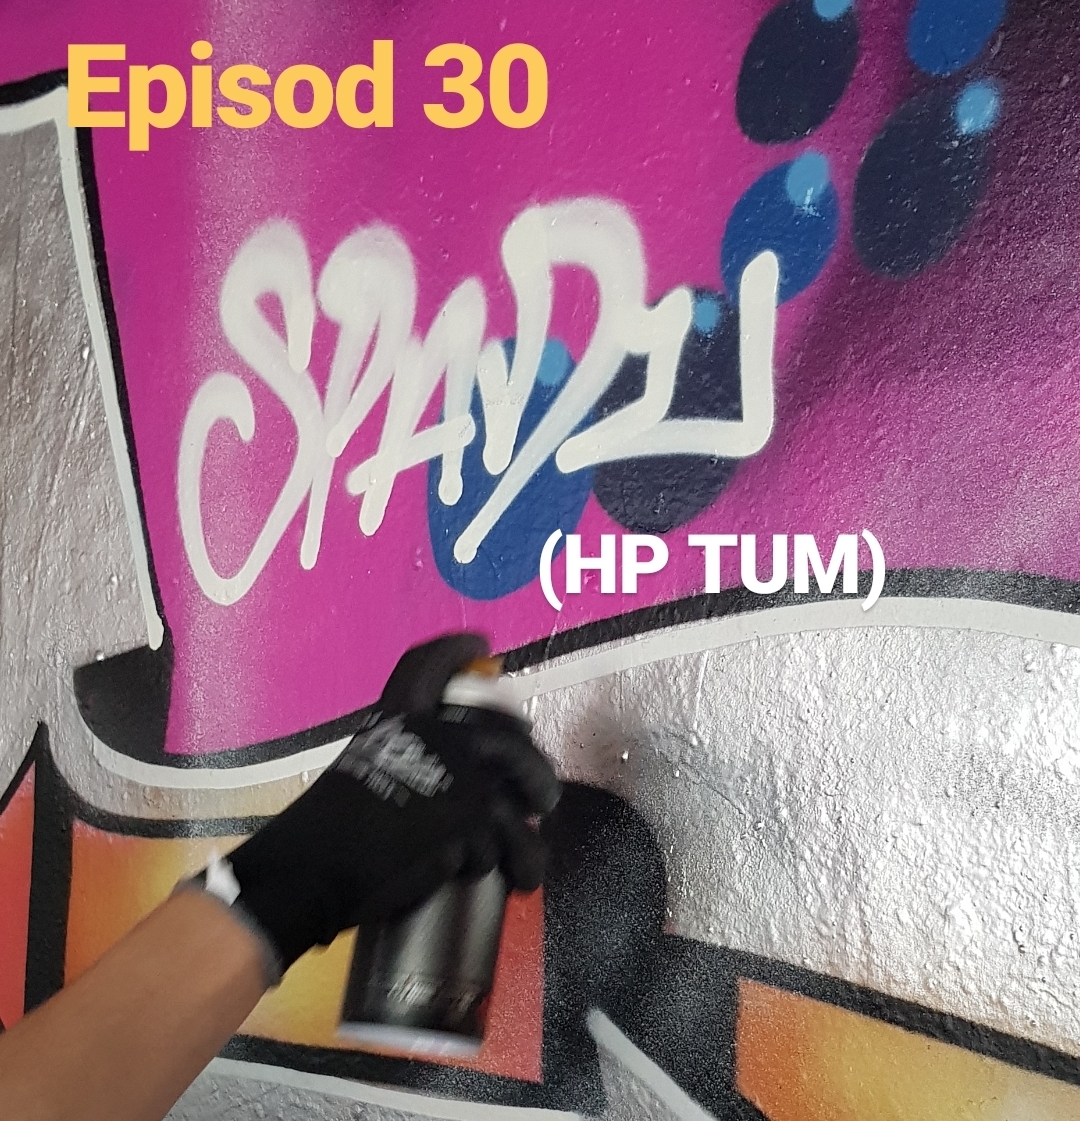 Episod 30. Spad (HP TUM)